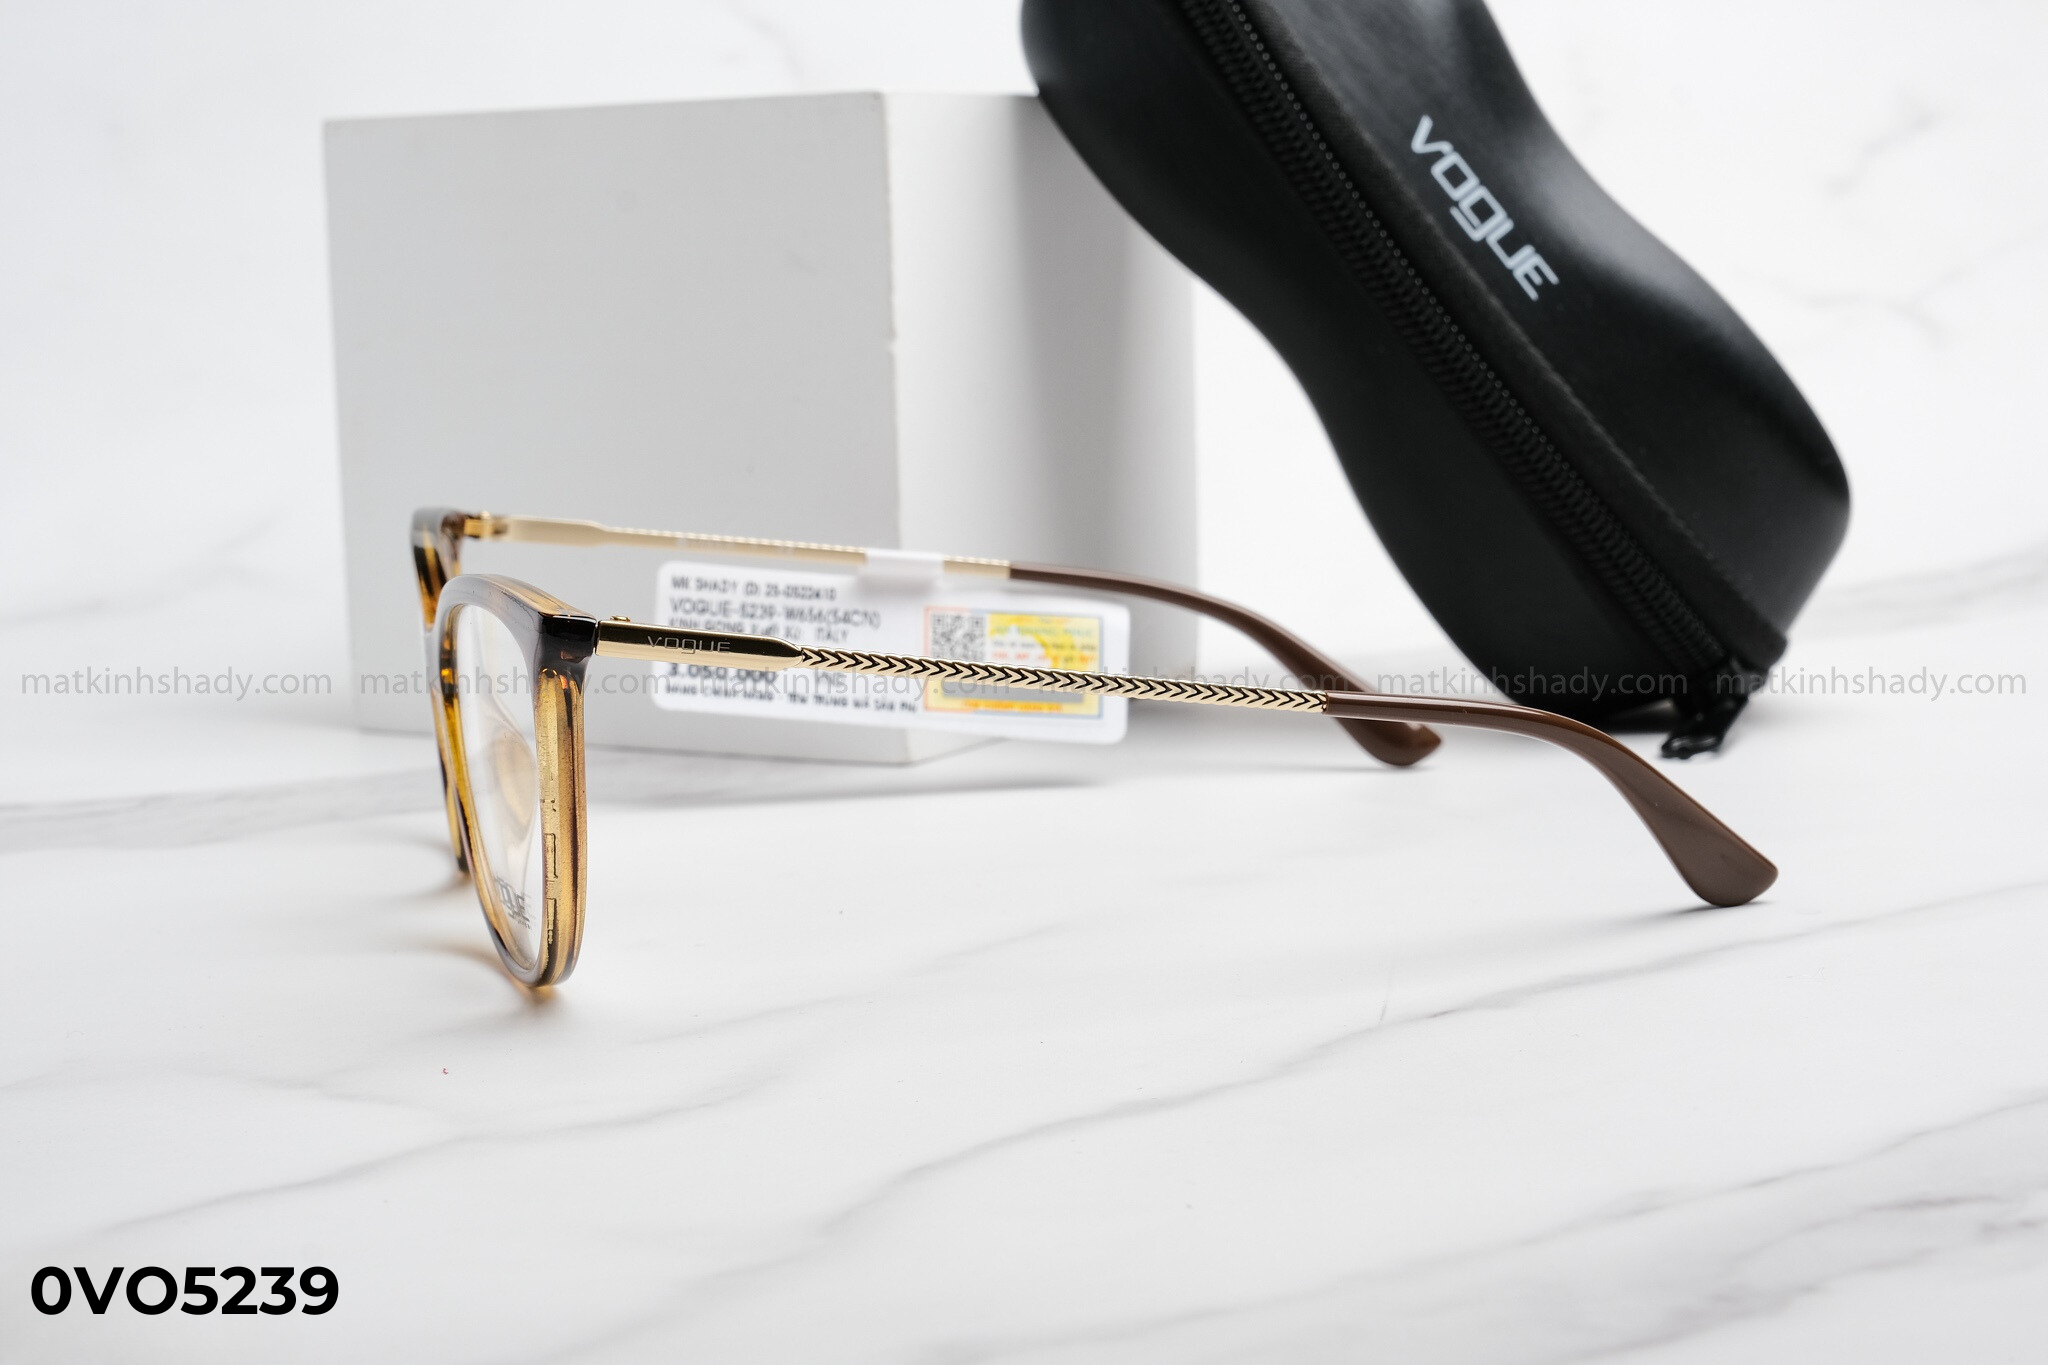  Vogue Eyewear - Glasses - 0VO5239 